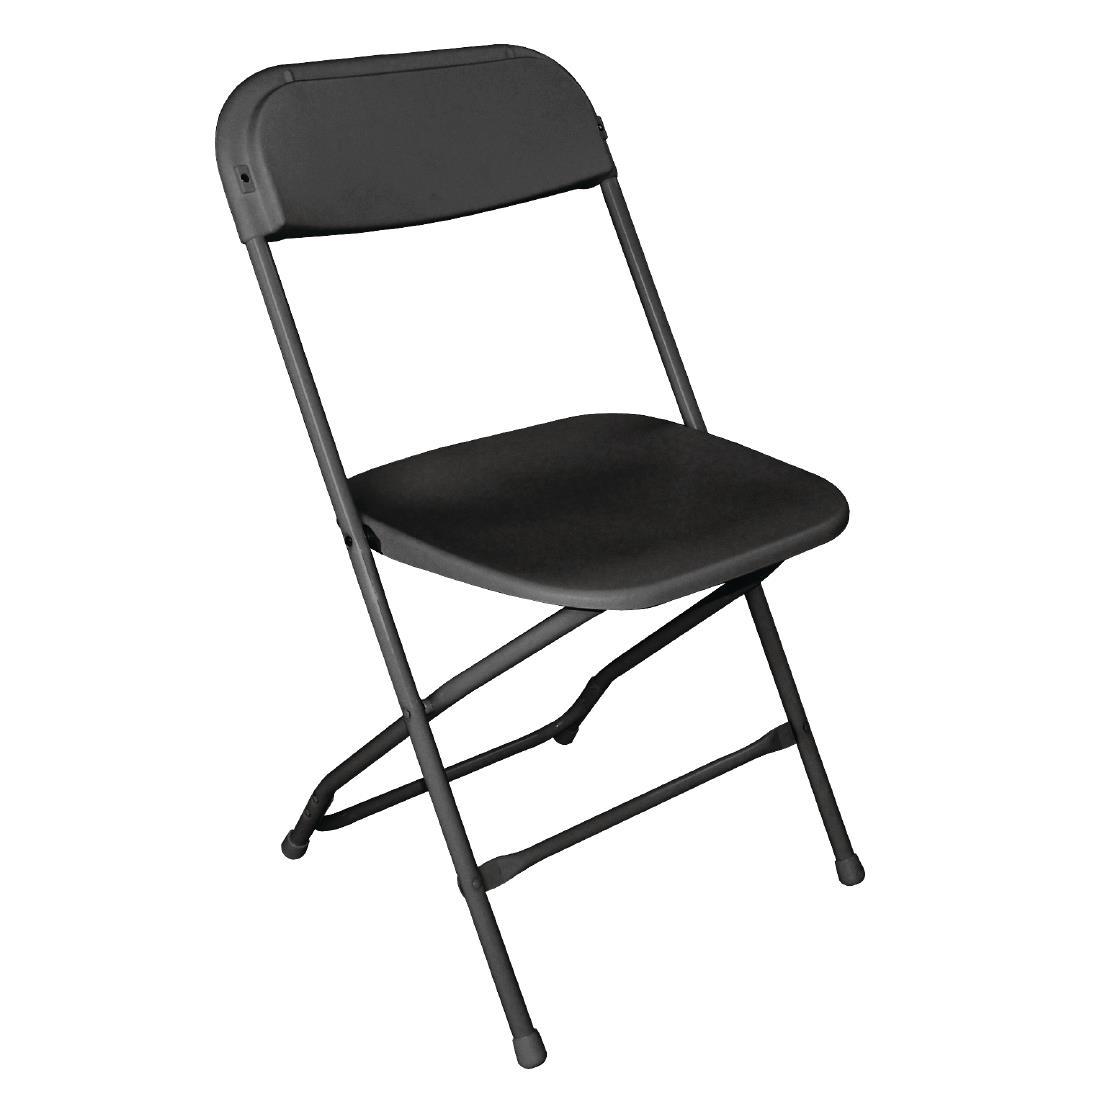 Bolero PP Folding Chairs Black (Pack of 10) - GD386  - 2